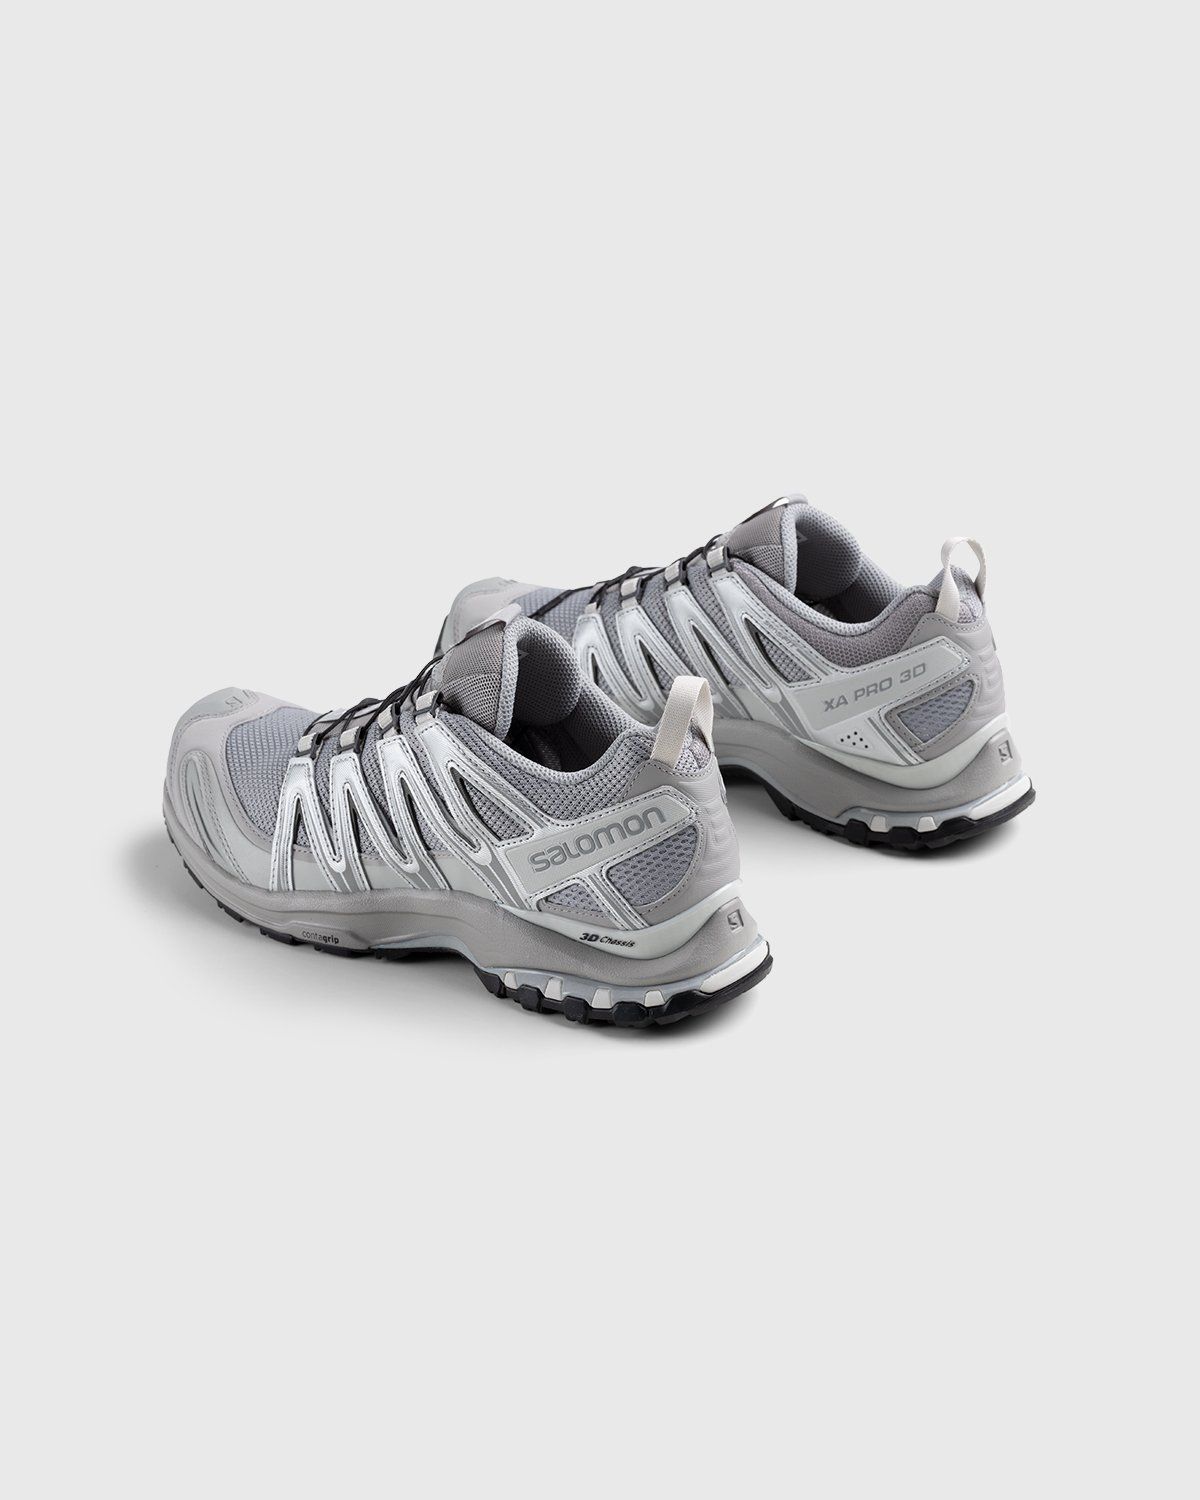 Salomon – XA Pro 3D Alloy/Silver/Lunar Rock - Low Top Sneakers - White - Image 3